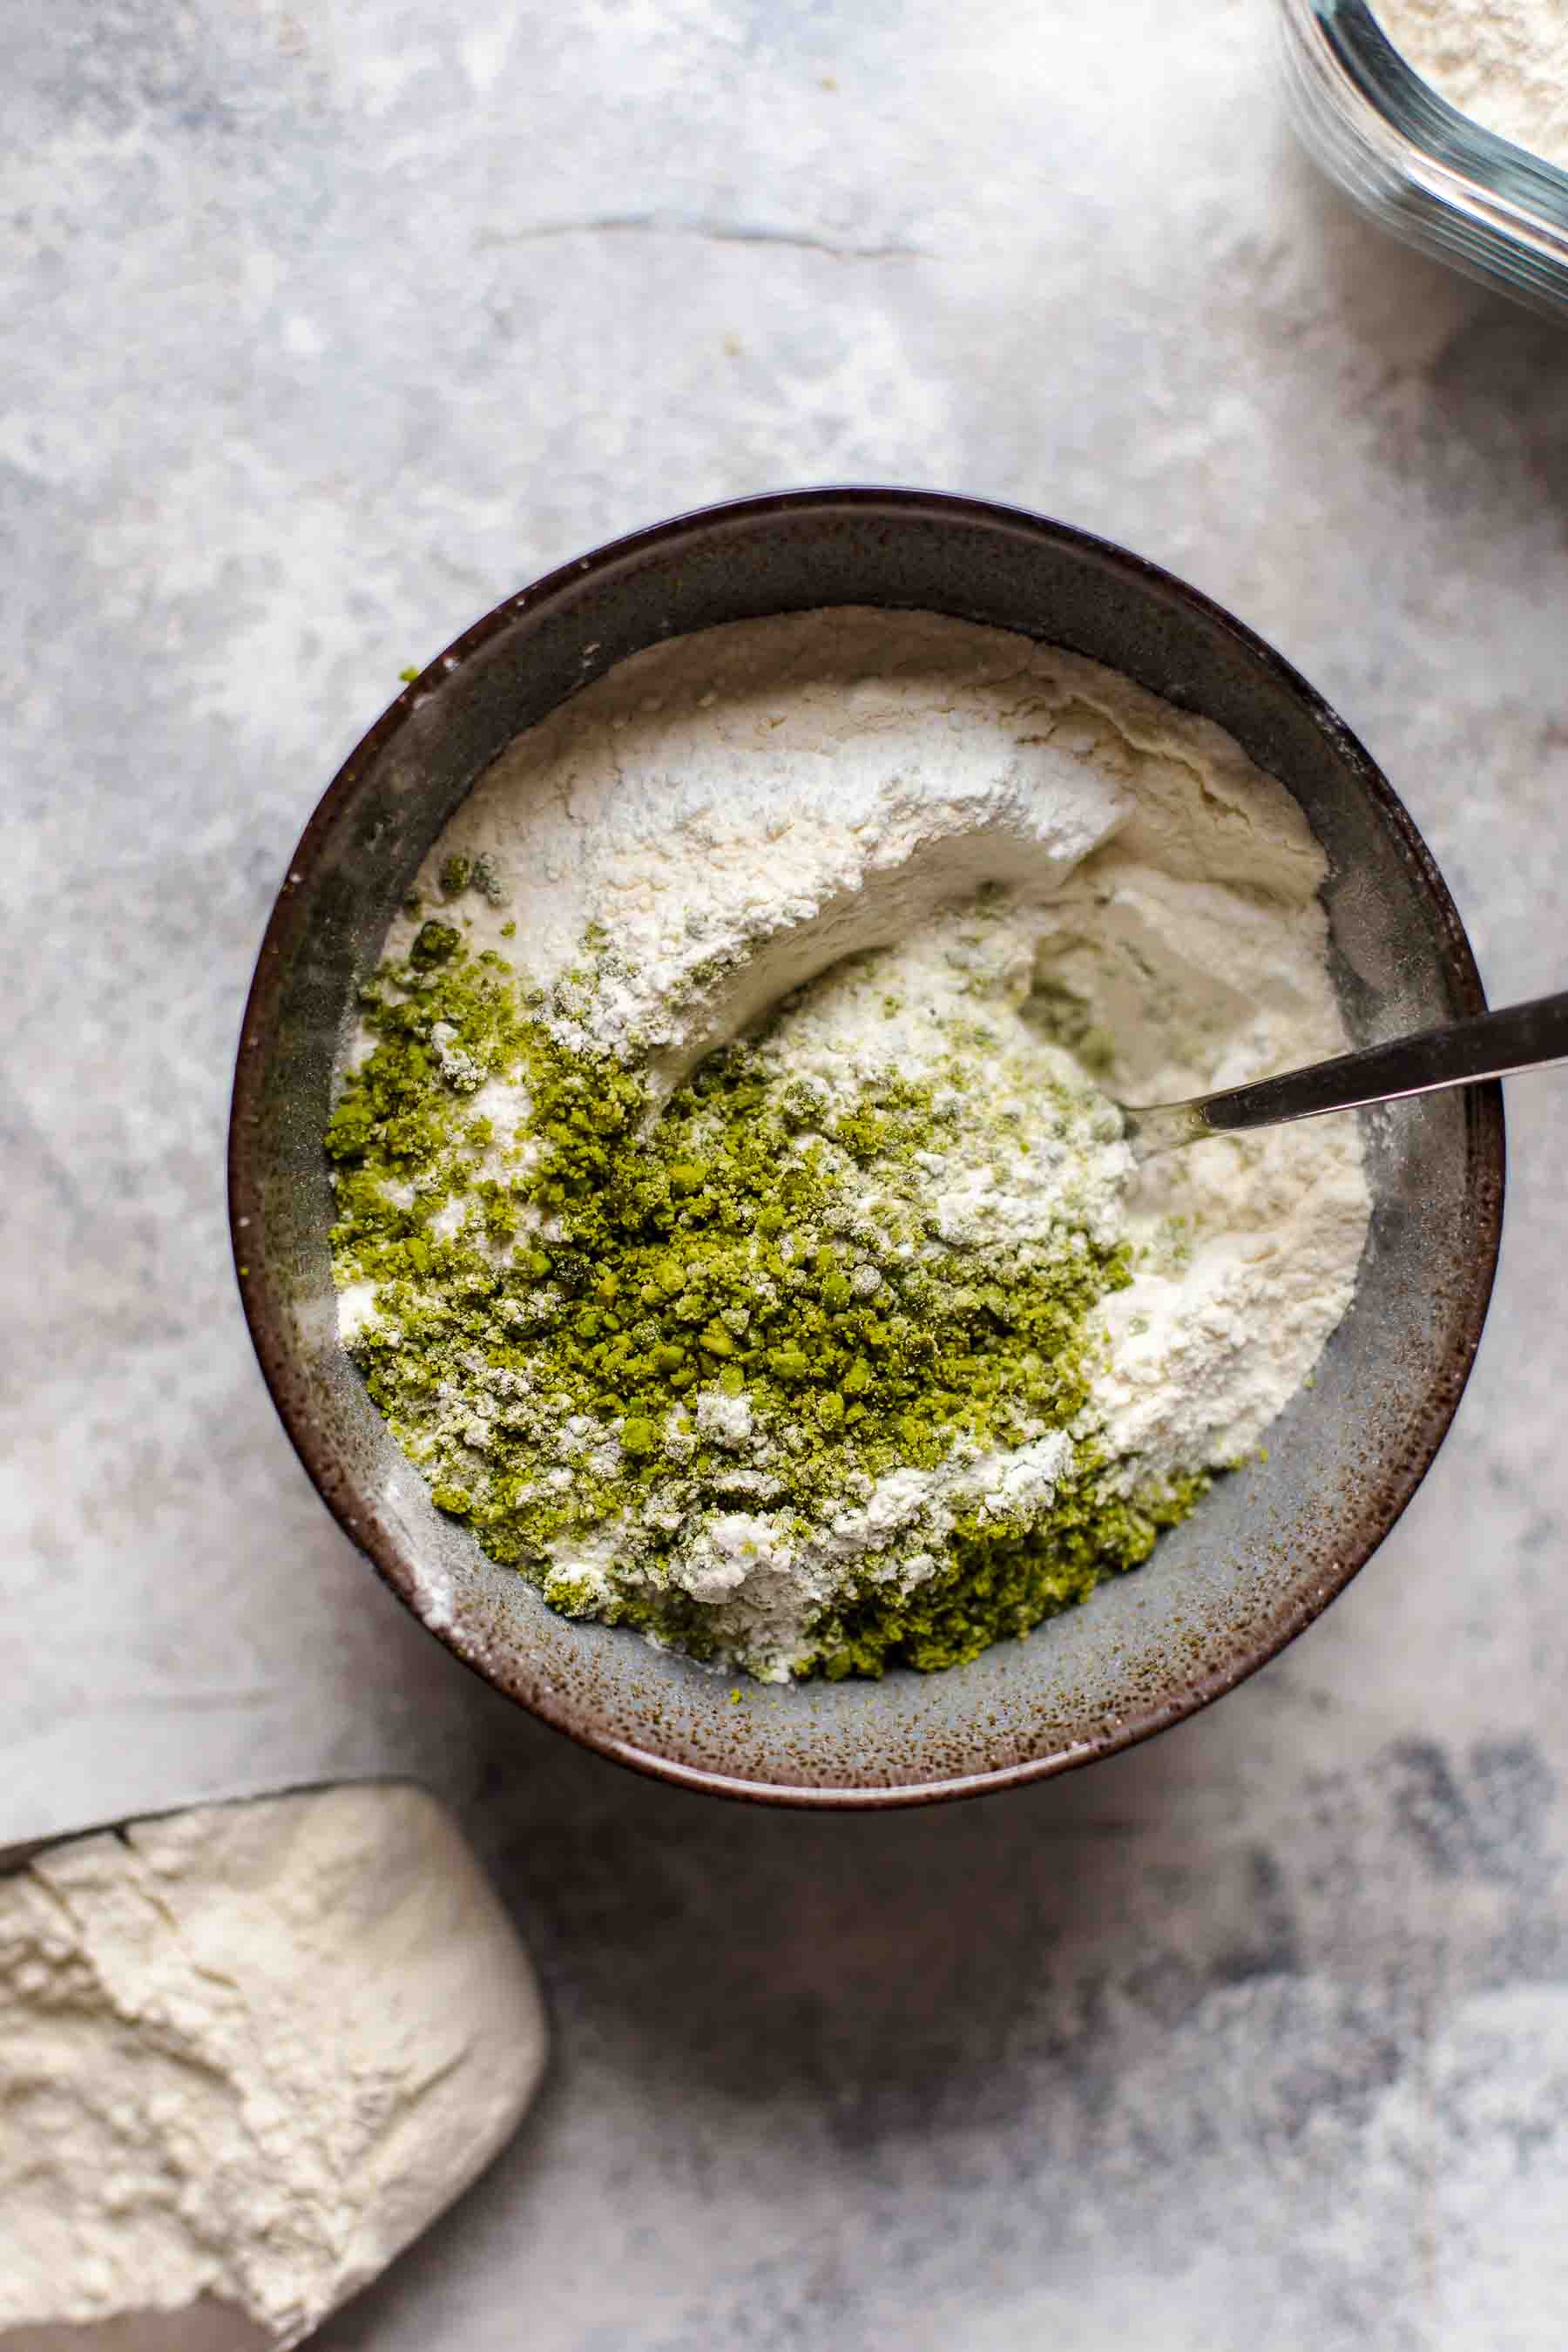 Ground pistachio, flour, baking powder, and salt in a small bowl